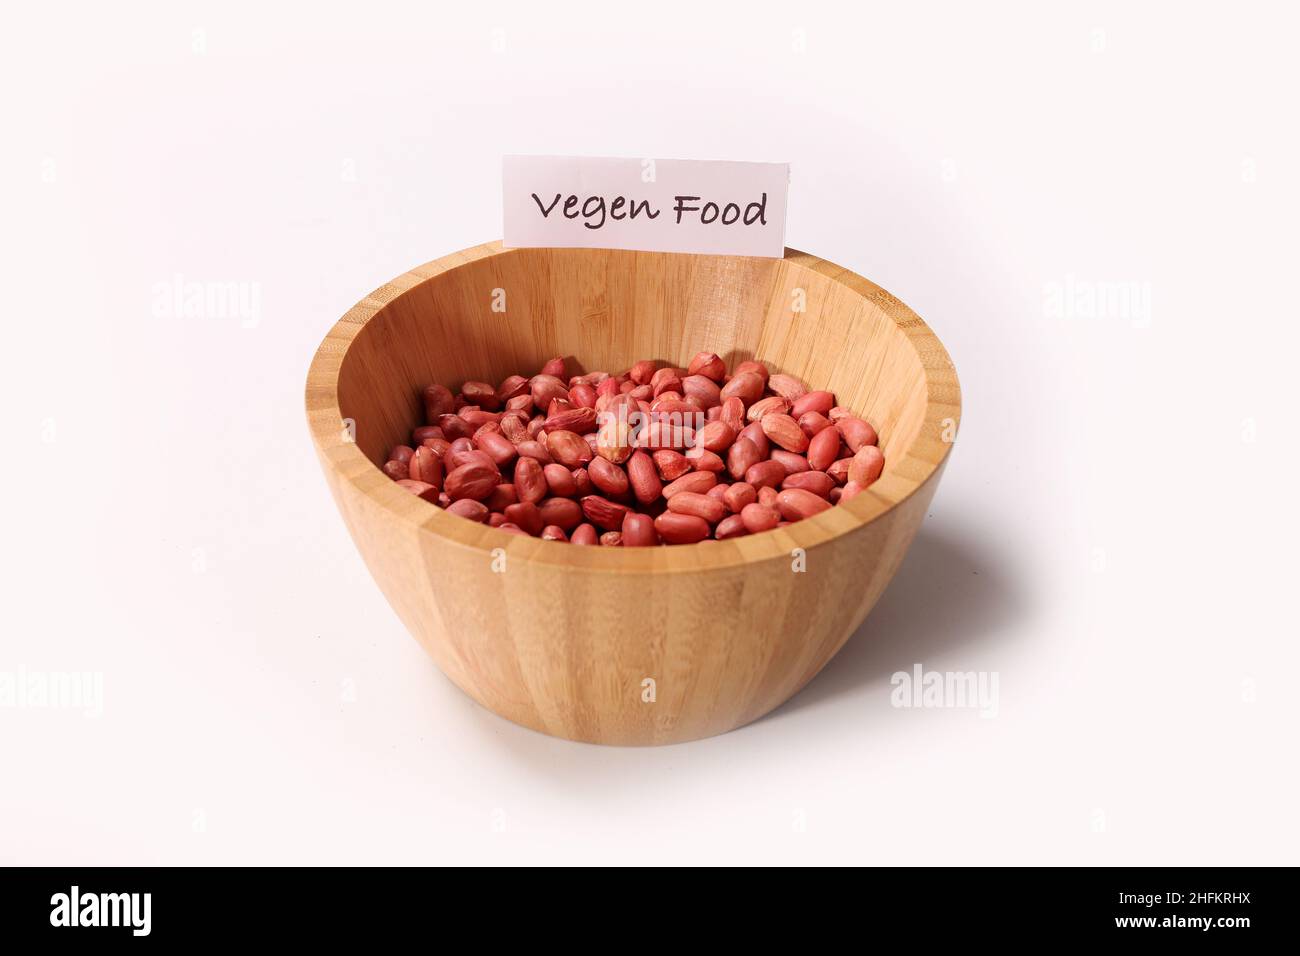 Vegan food, bowl of Organic Redskin Peanuts Stock Photo